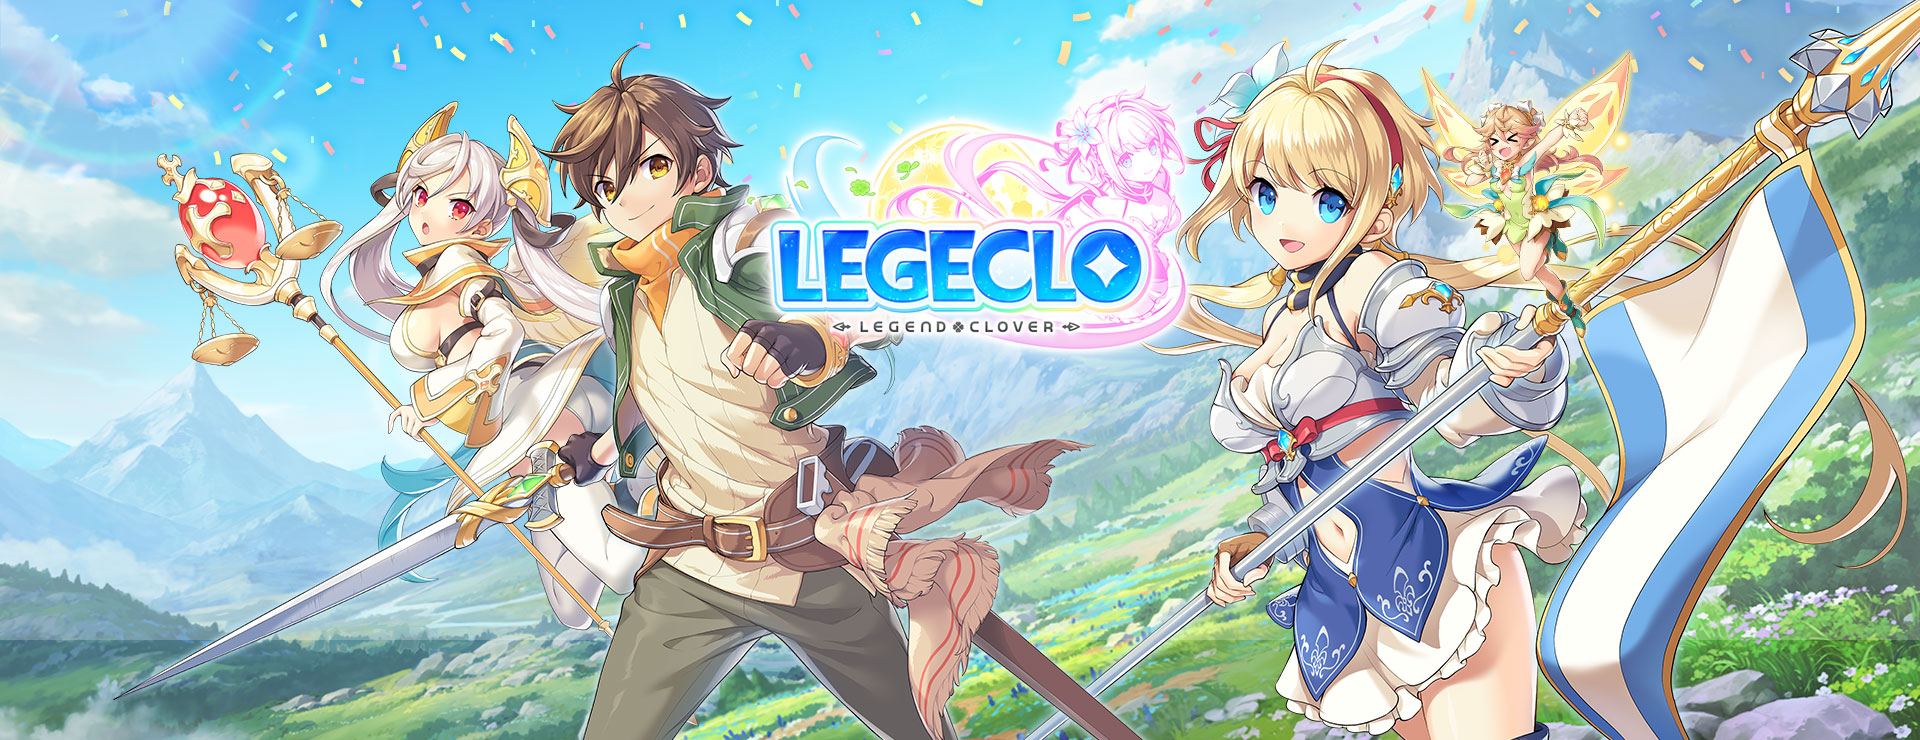 Legeclo: Legend Clover - ターン制RPG ゲーム